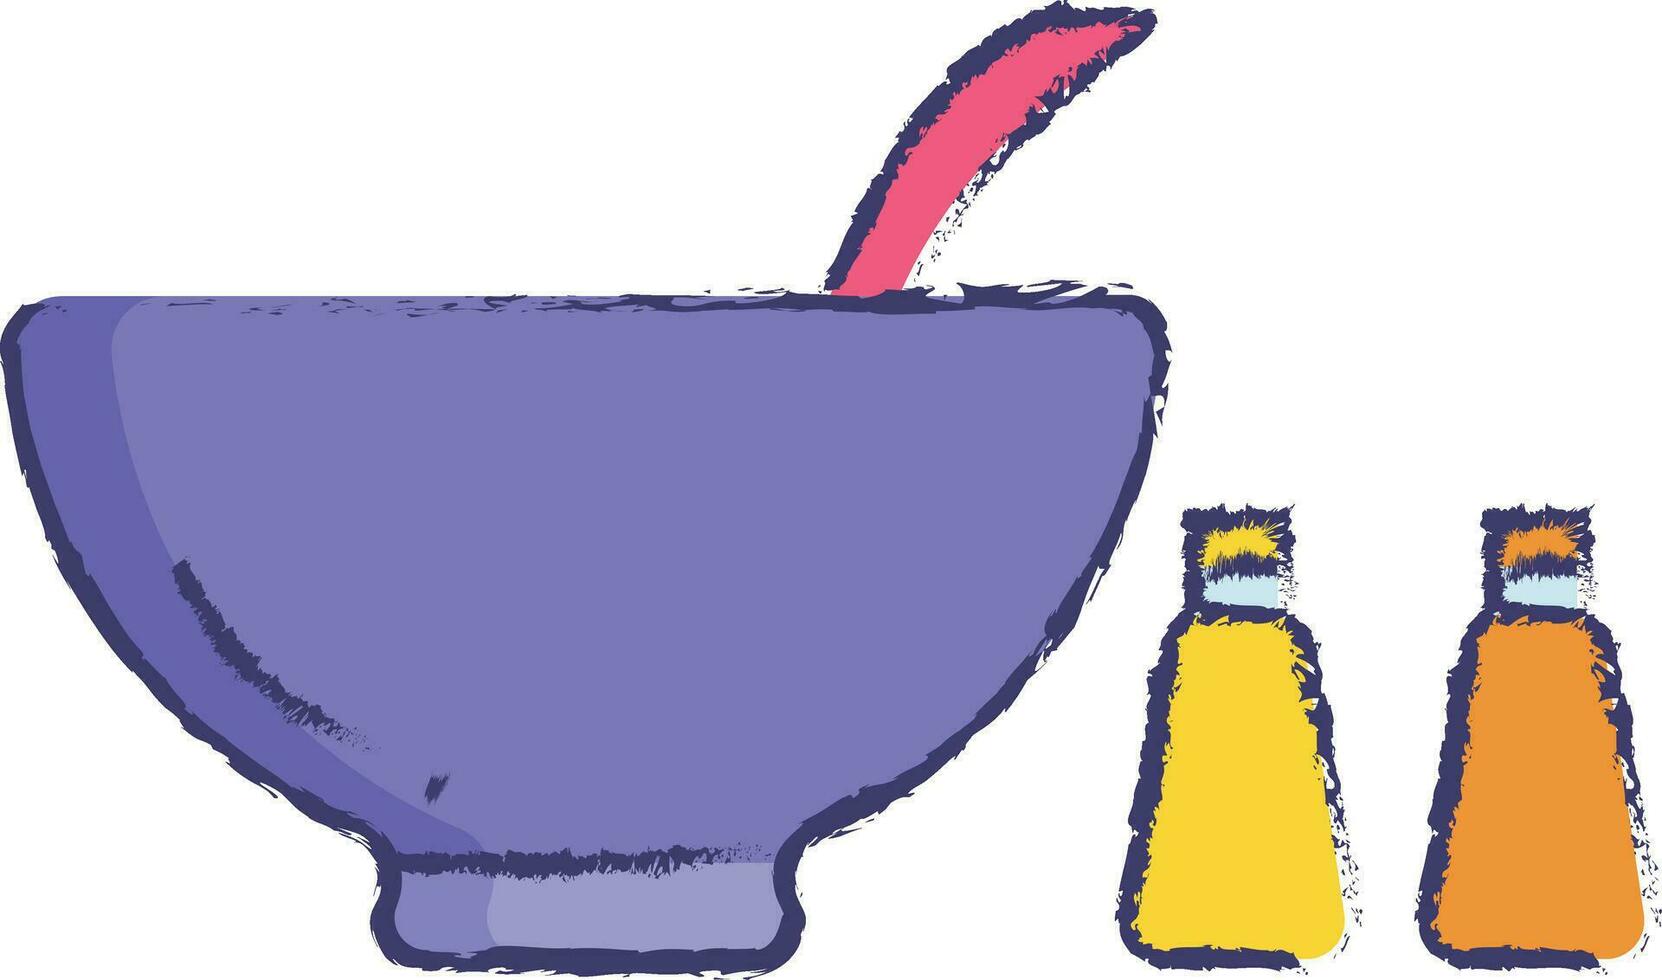 Soup bowl hand drawn vector illustration